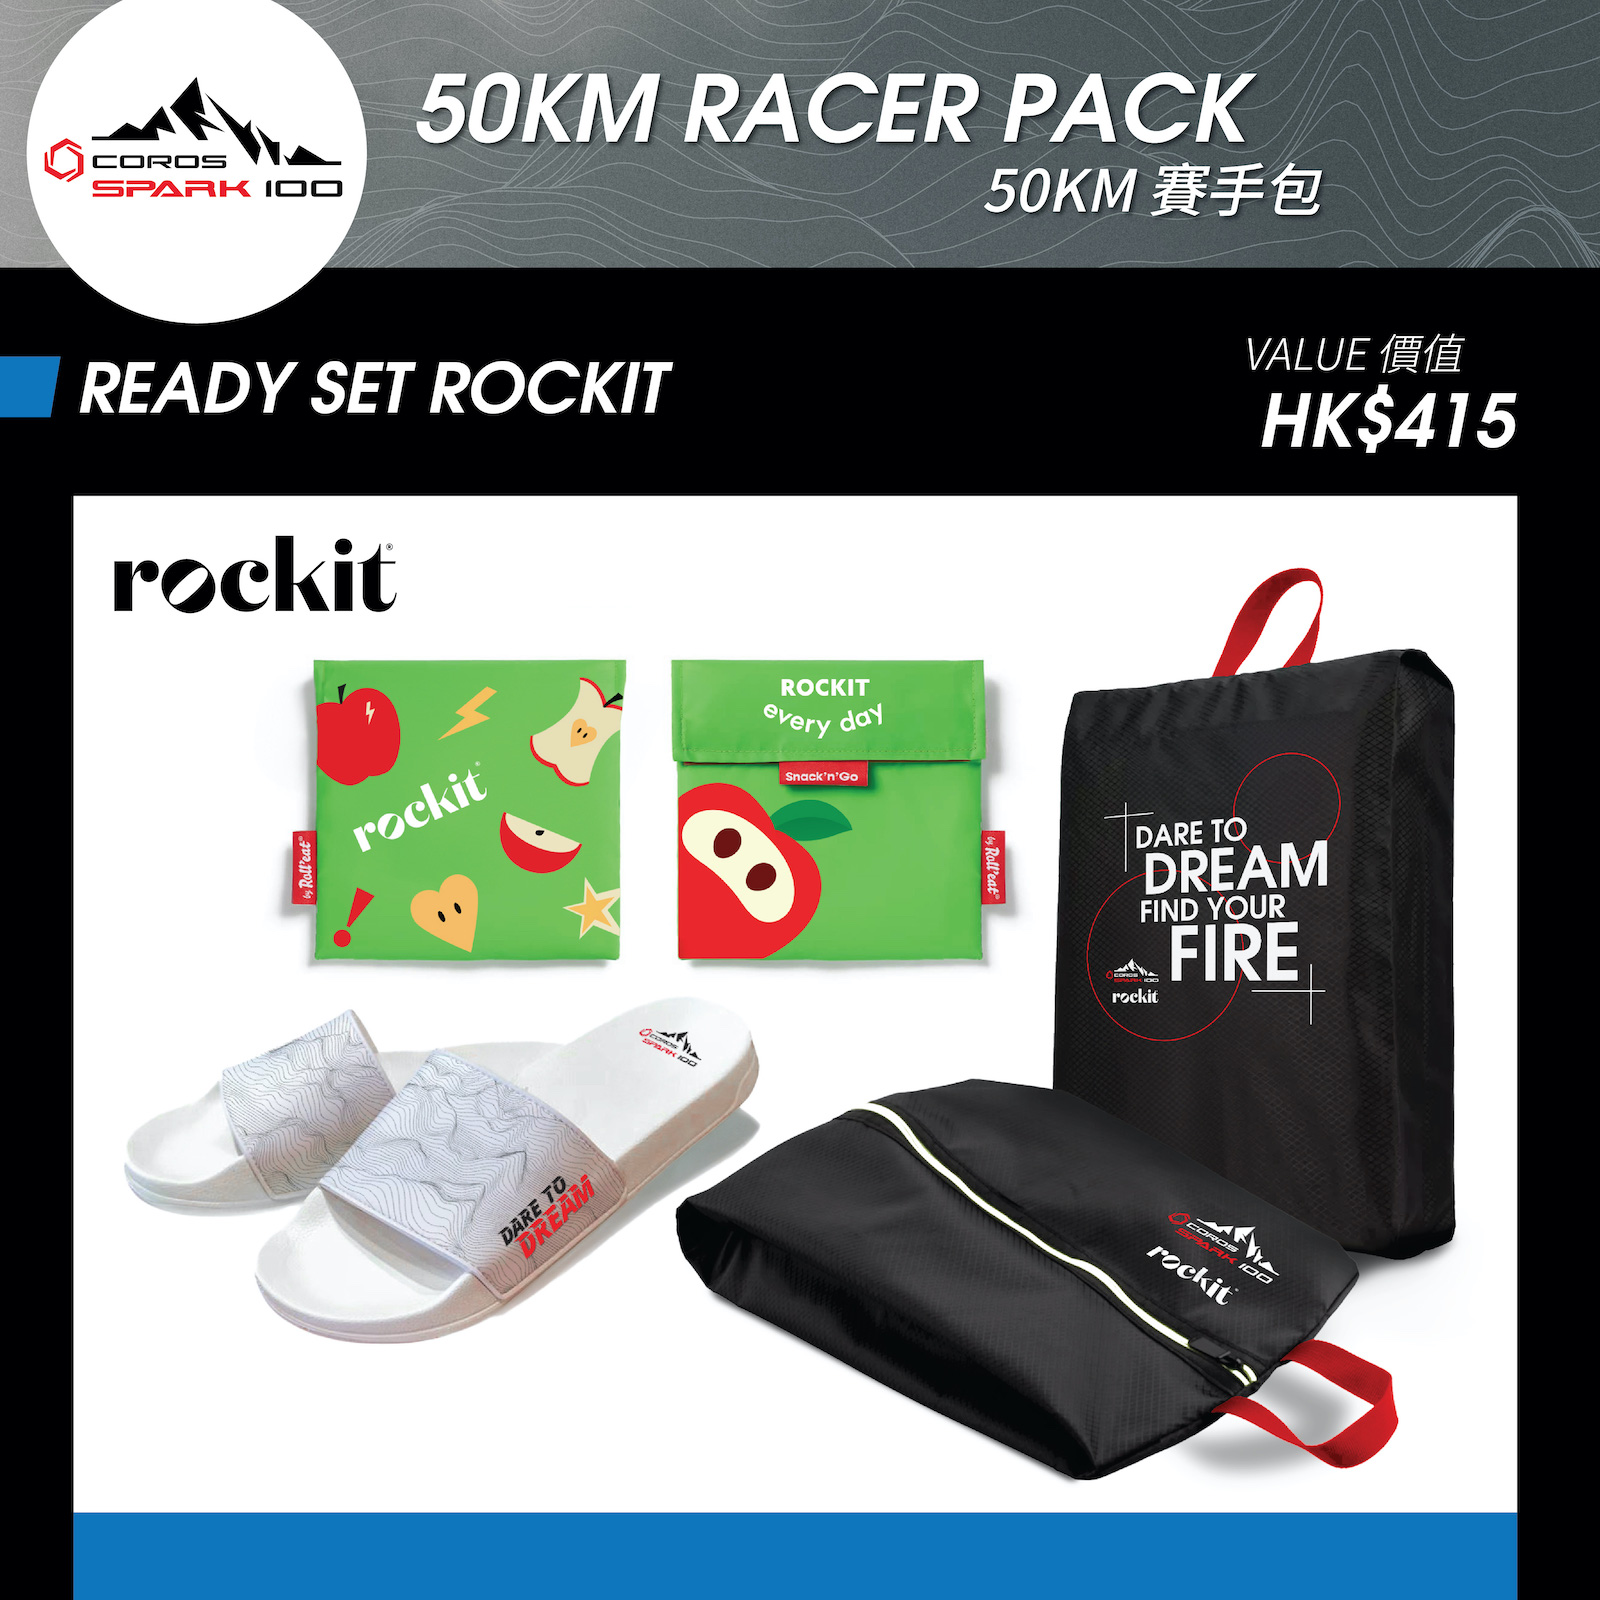 READY SET ROCKIT - Slippers + Shoe bags + Reusable fruit bag (Value: HK$415)